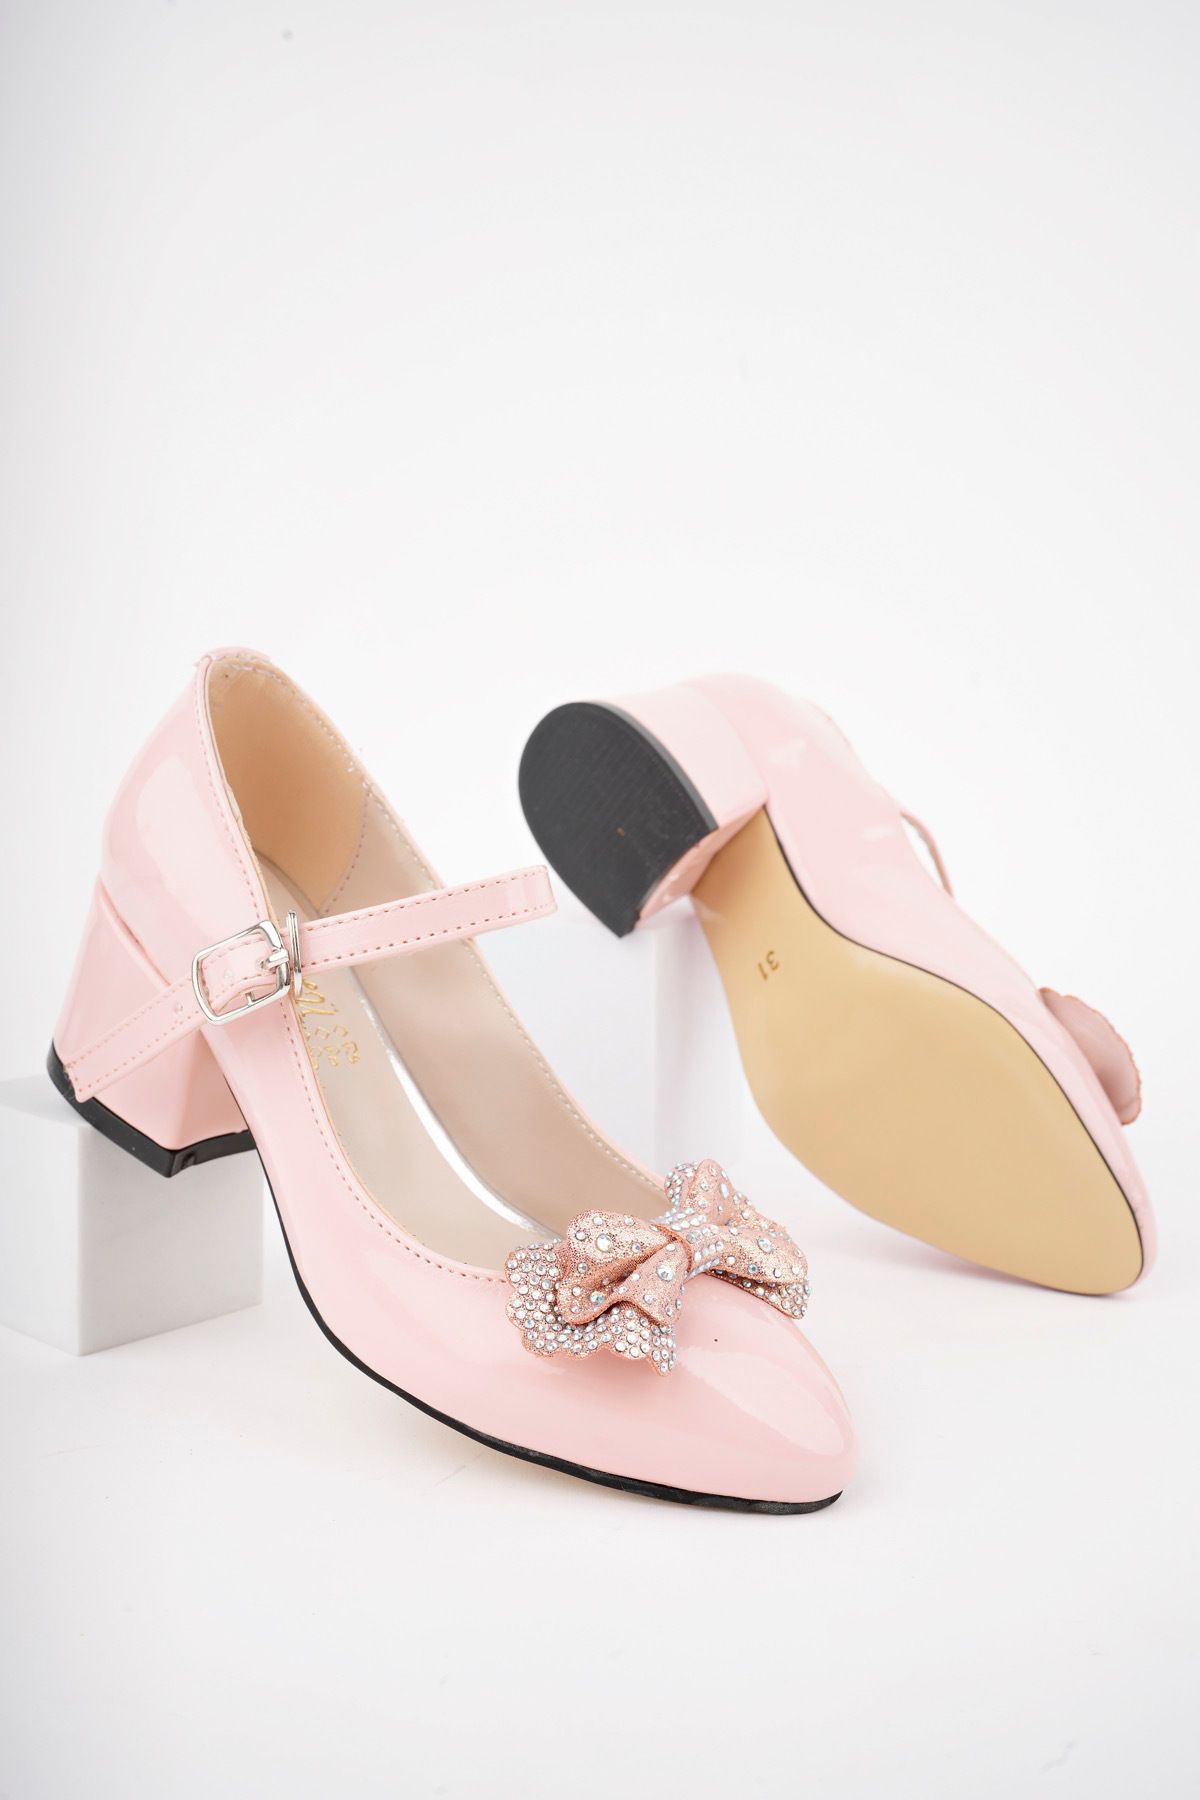 Prensess ayakkabı stiletto